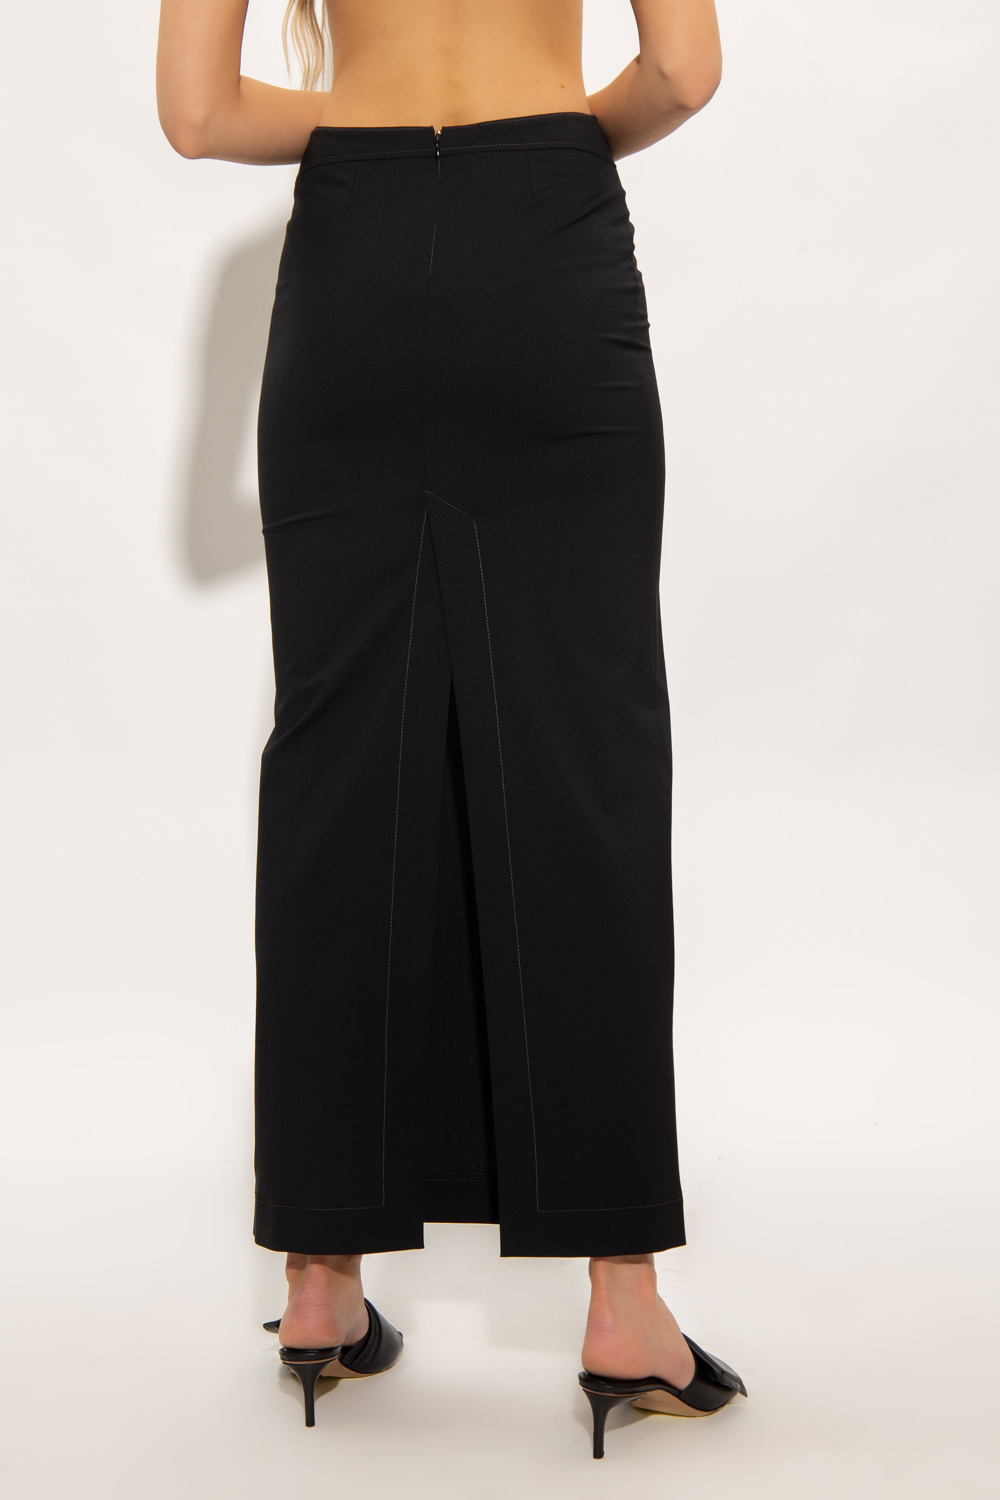 Jacquemus ‘Pina’ skirt with slit